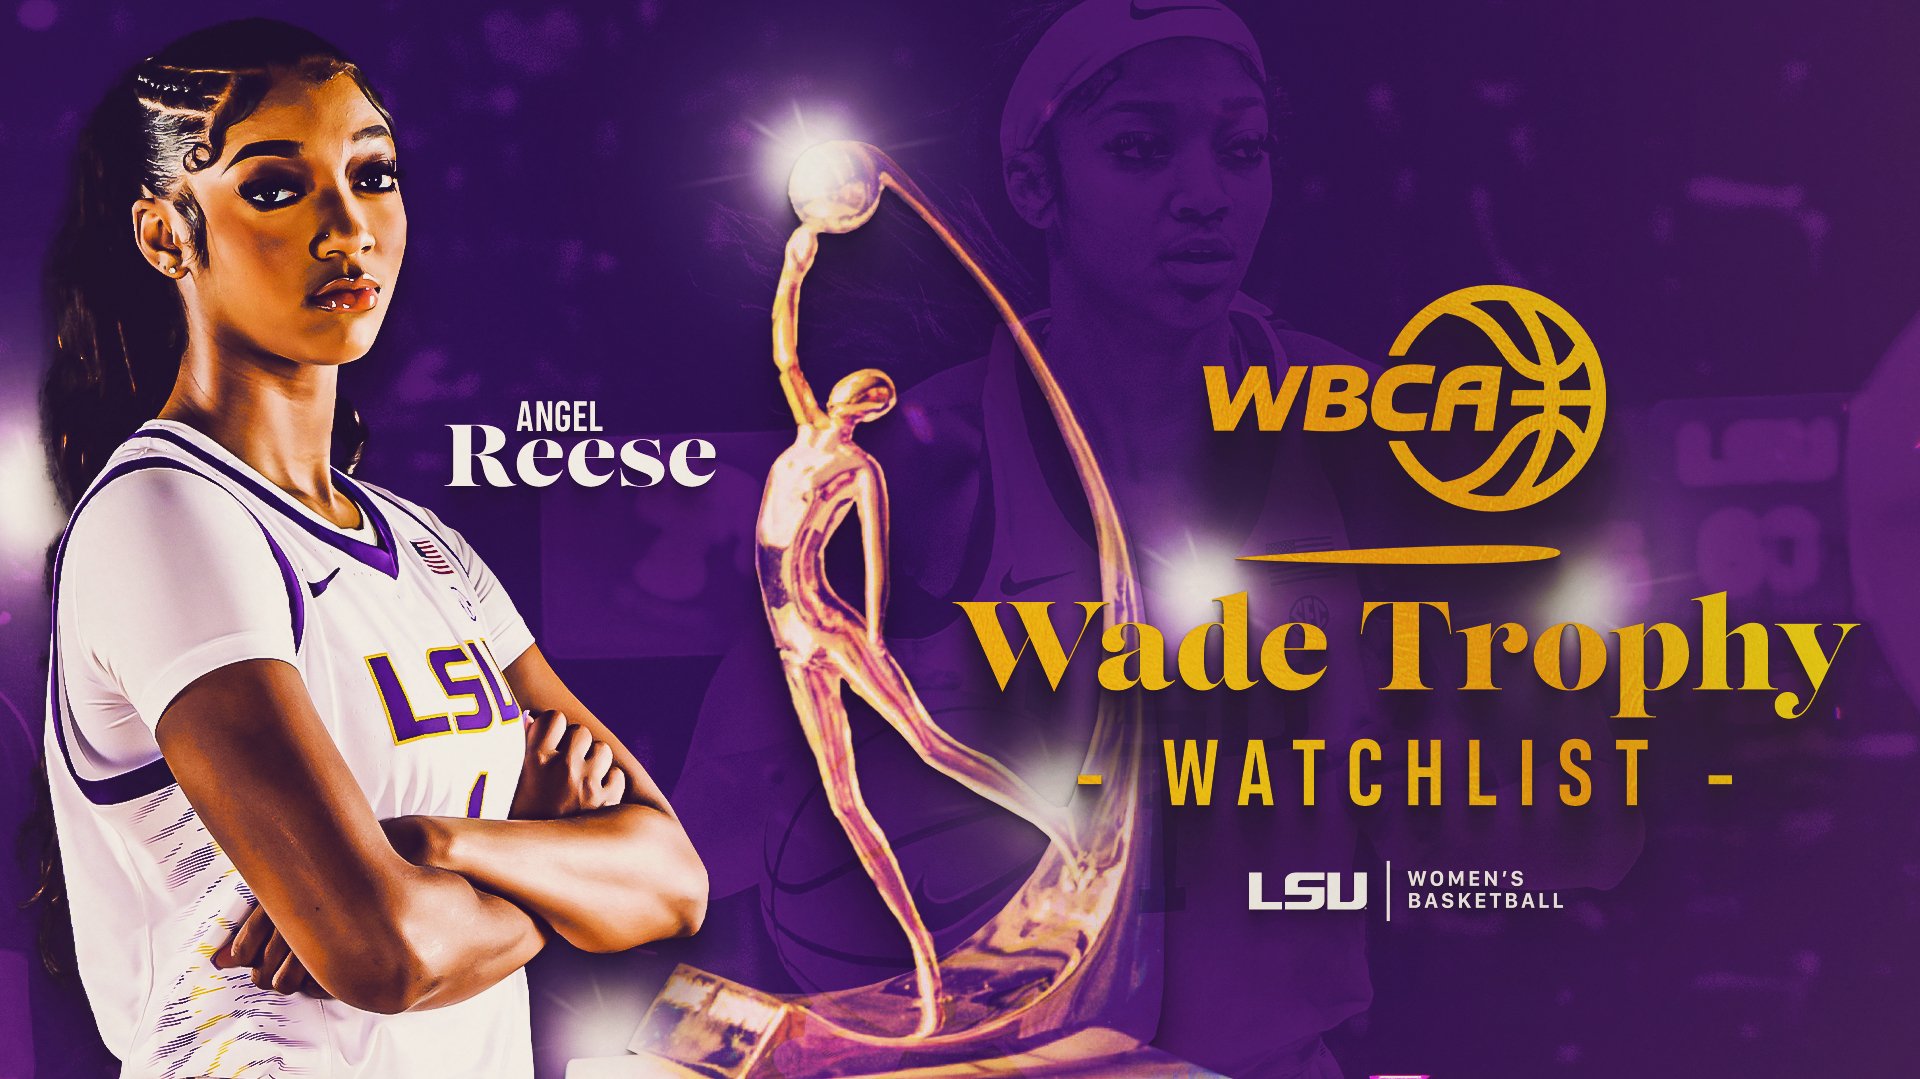 Lsu S Angel Reese Named On Wade Trophy Watchlist